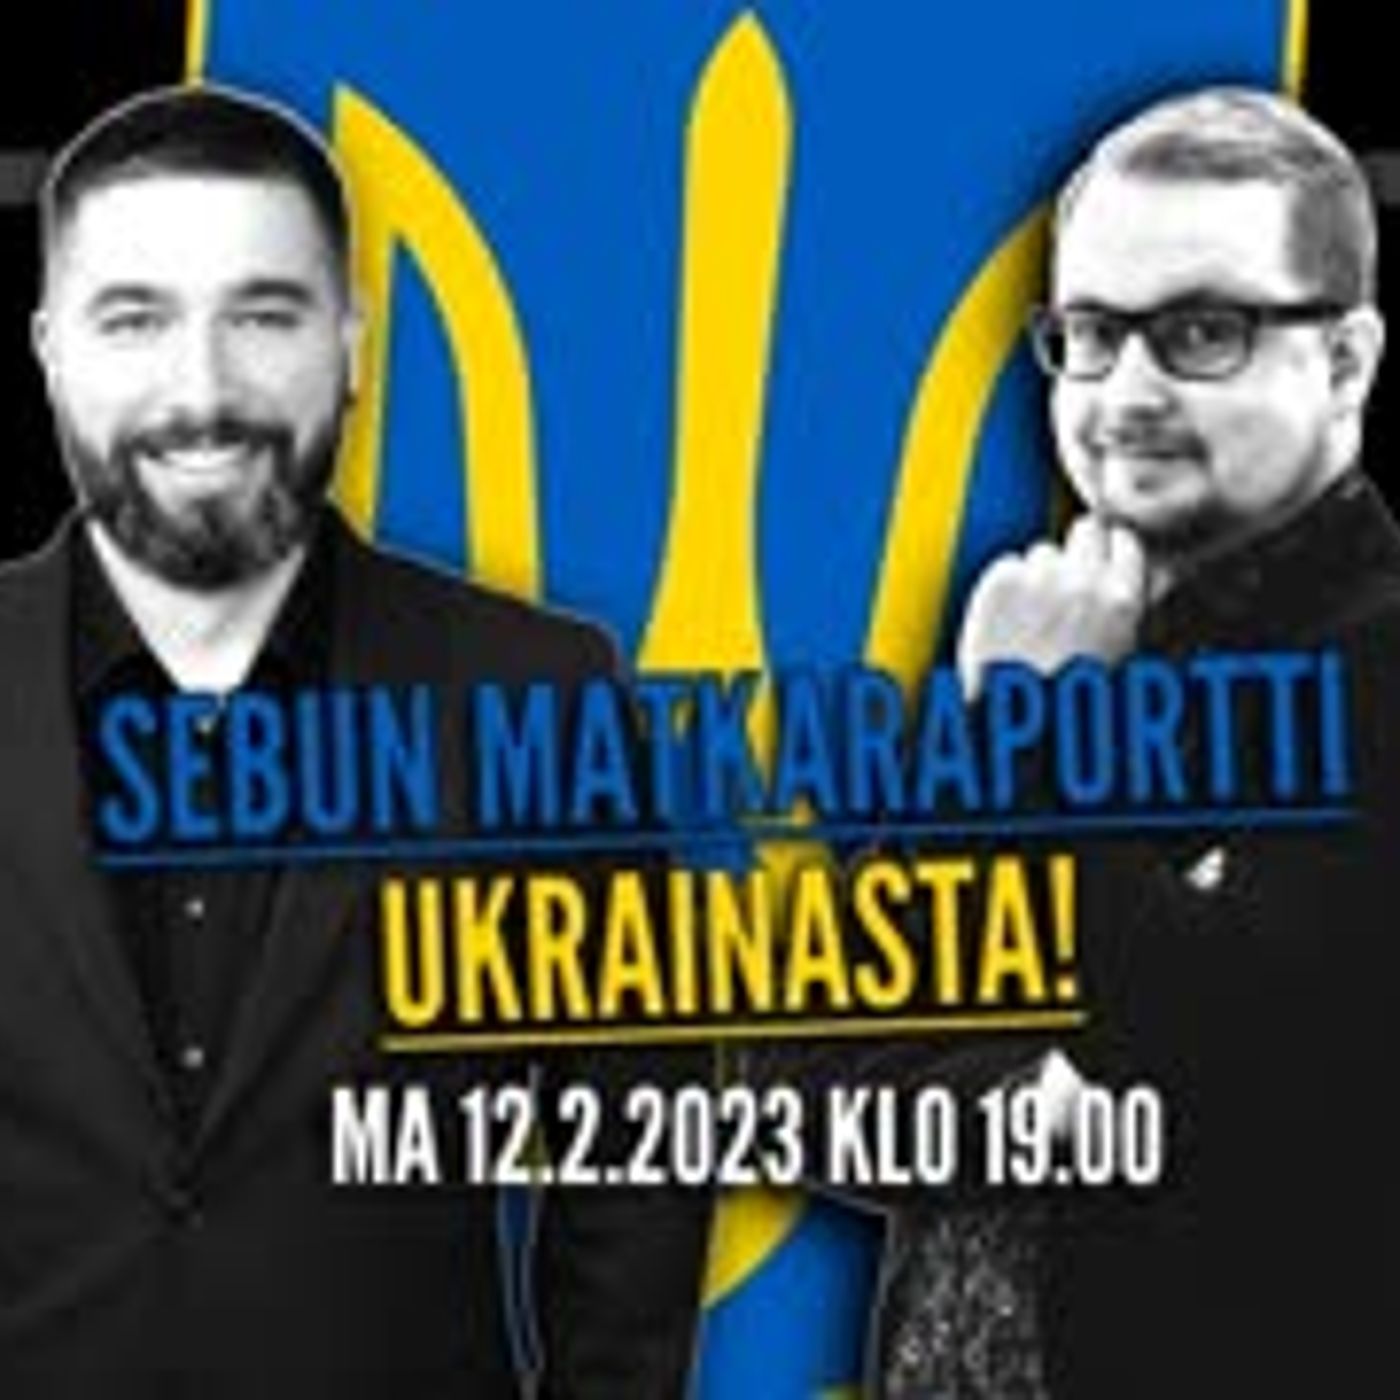 #58 - Sebun matkaraportti livenä Ukrainasta! - Pro Patria Suomi-Ukraina